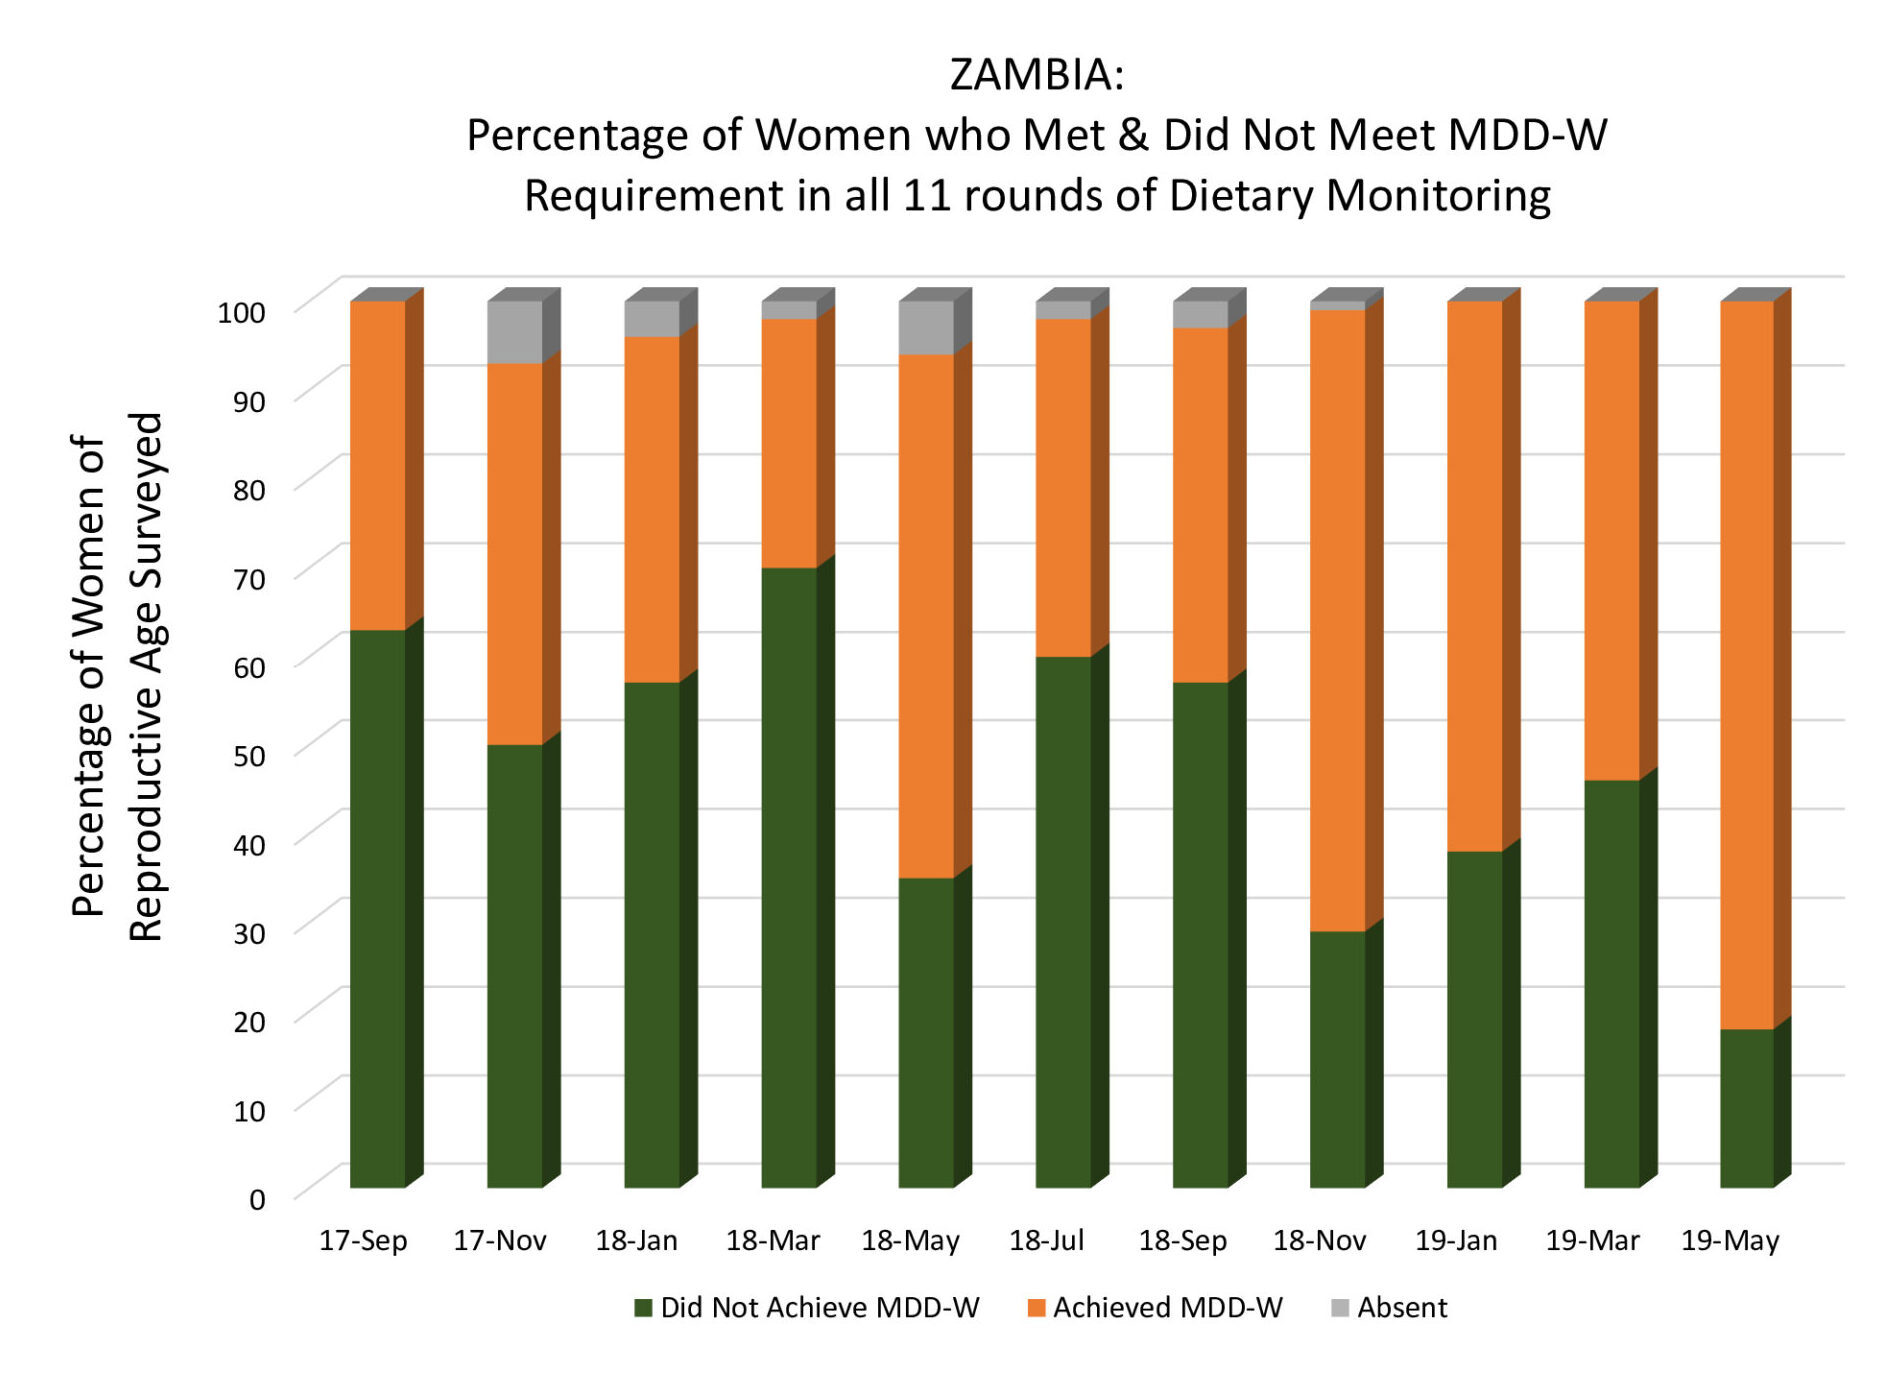 Zambia Percentage of Women Meeting MDD-W